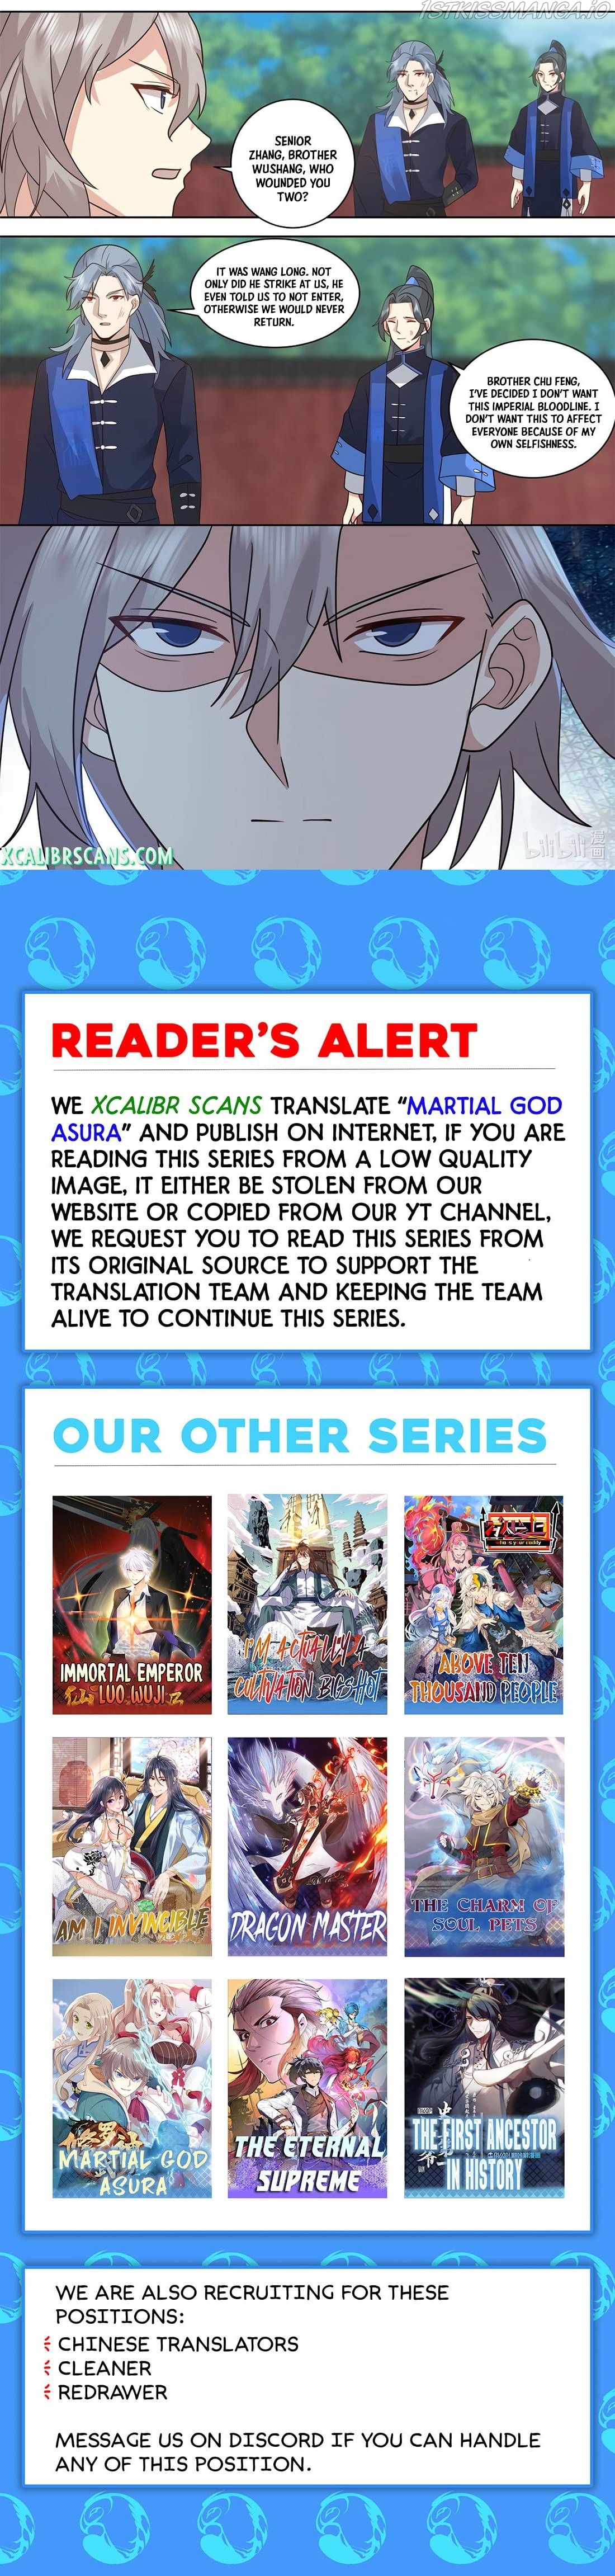 Martial God Asura Chapter 501 - Page 9